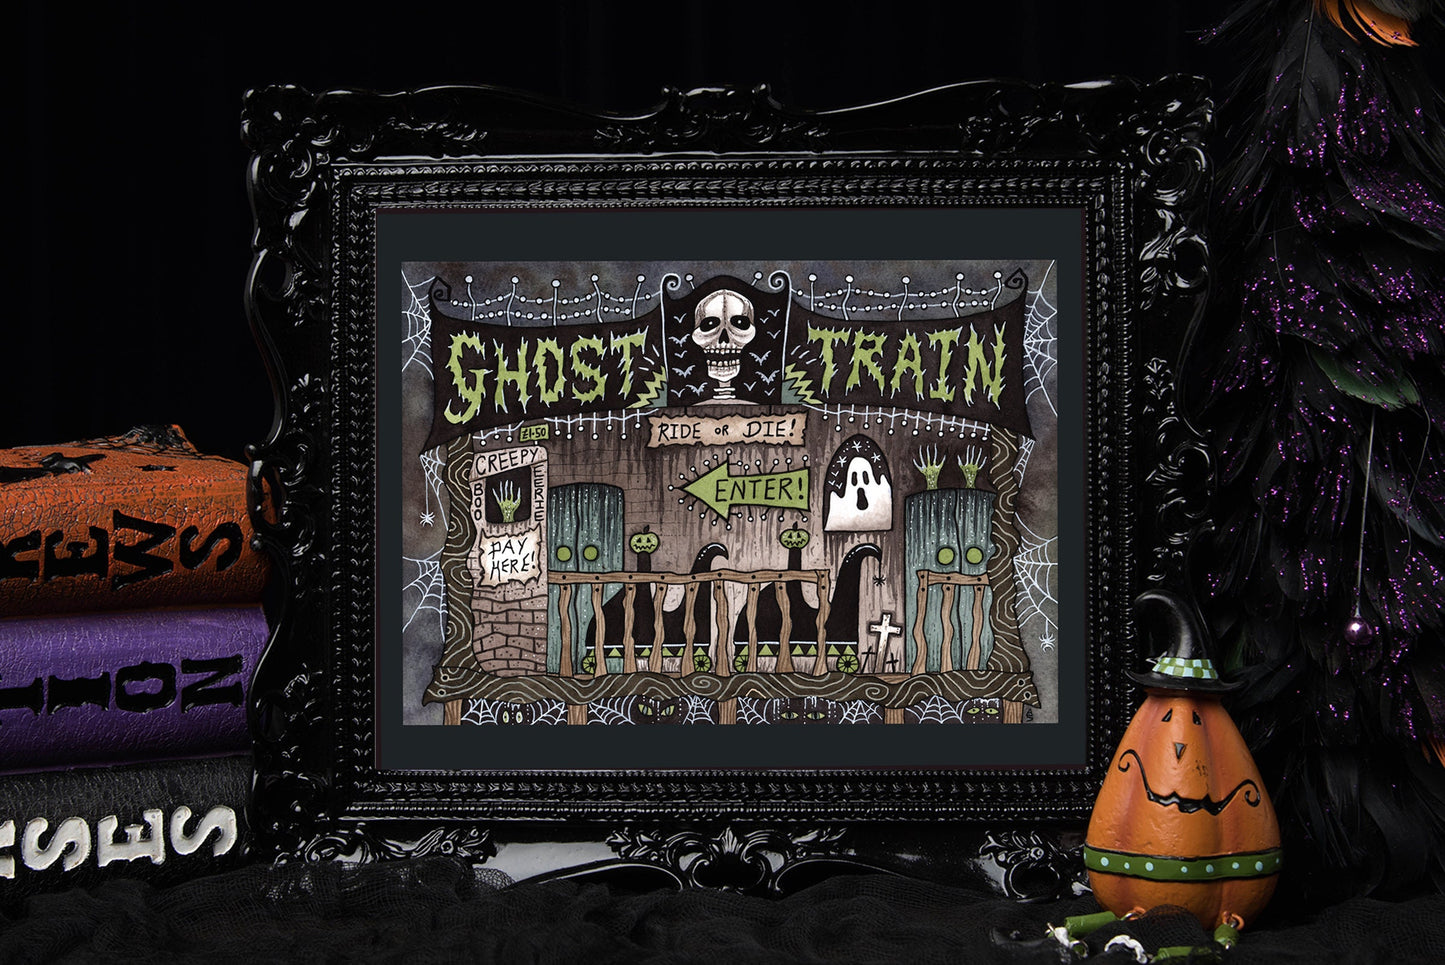 Ghost Train Print - Spooky Funfair Horror Ride A5 - A4 - A3 Halloween Horror Wall Art - Retro Vintage Style Dark Ride Fairground Decoration